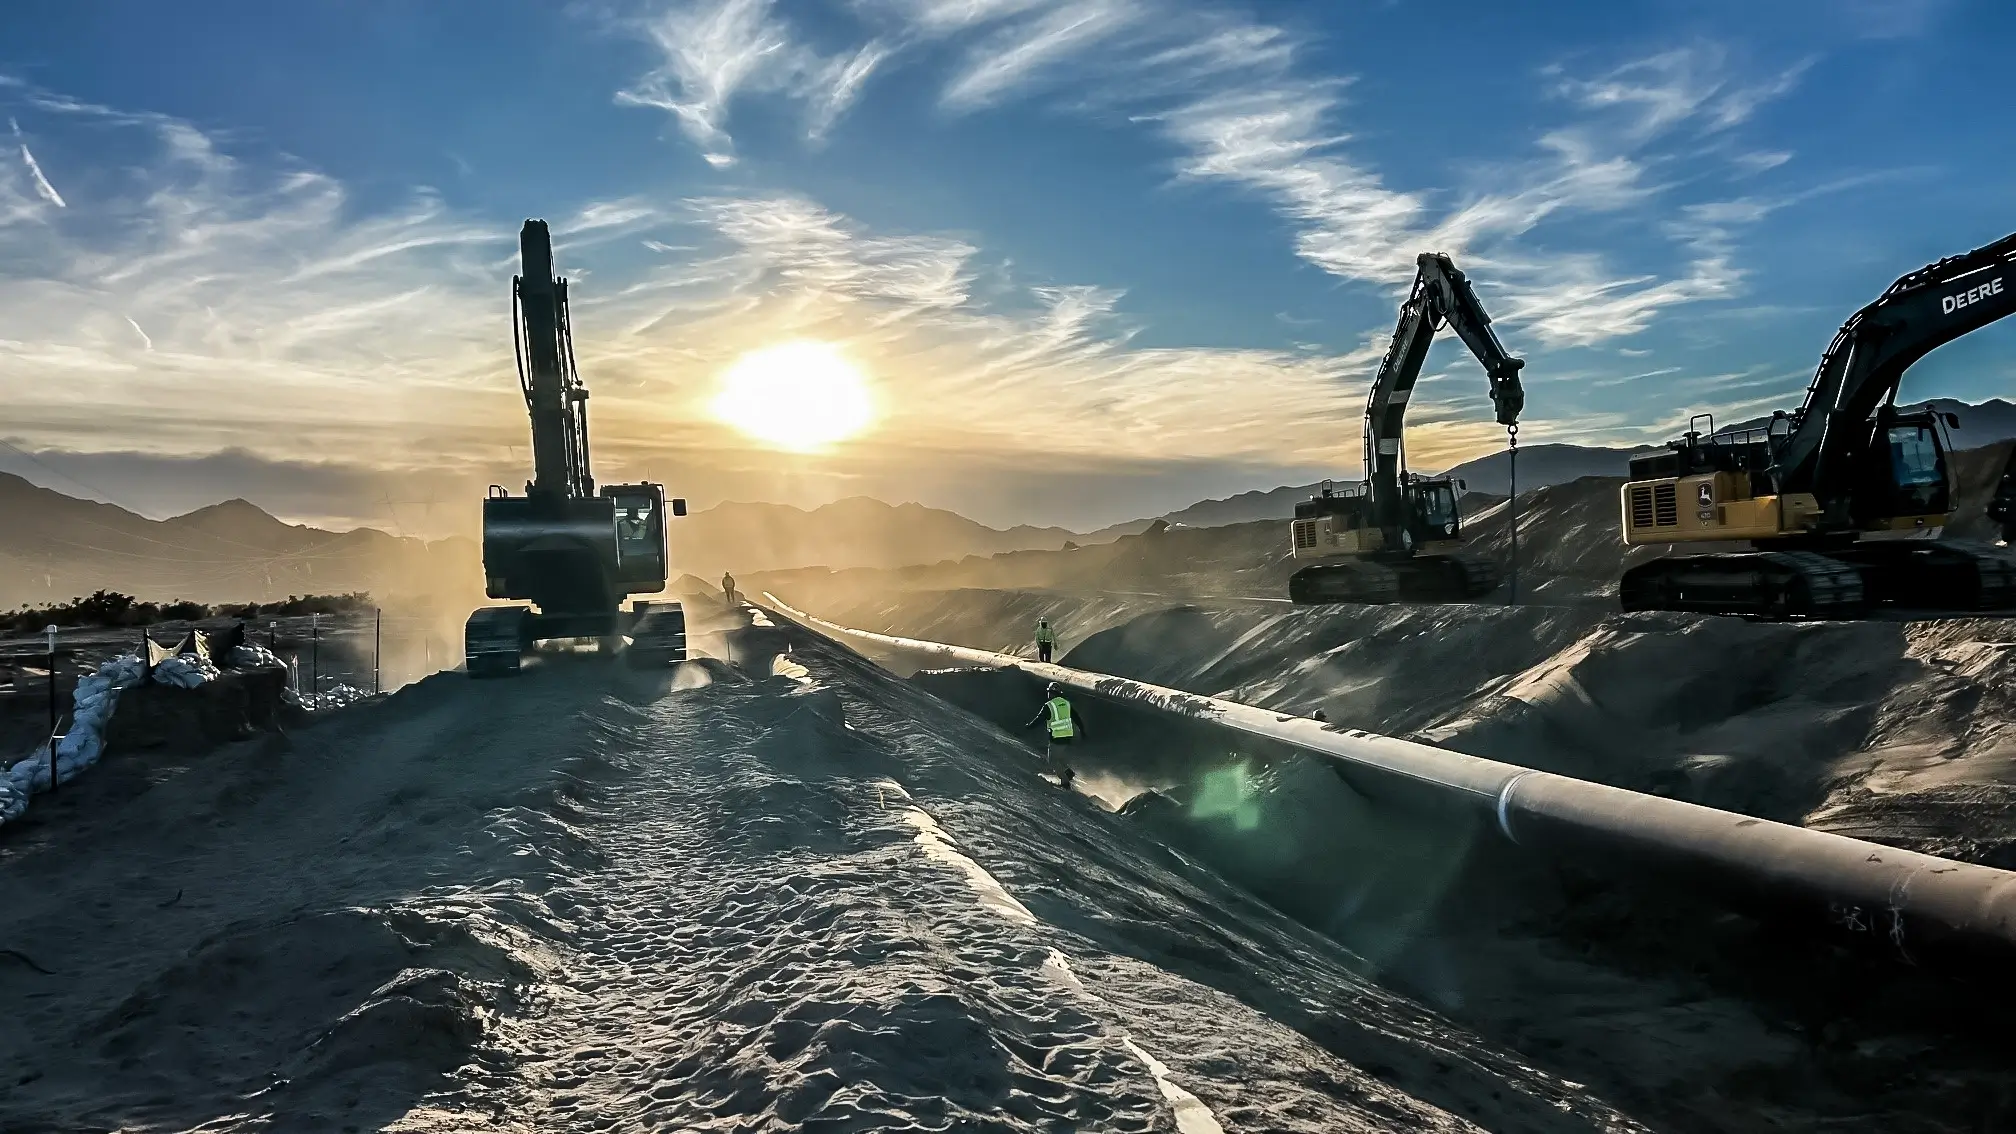 Several excavators operate near a pipeline at sunrise